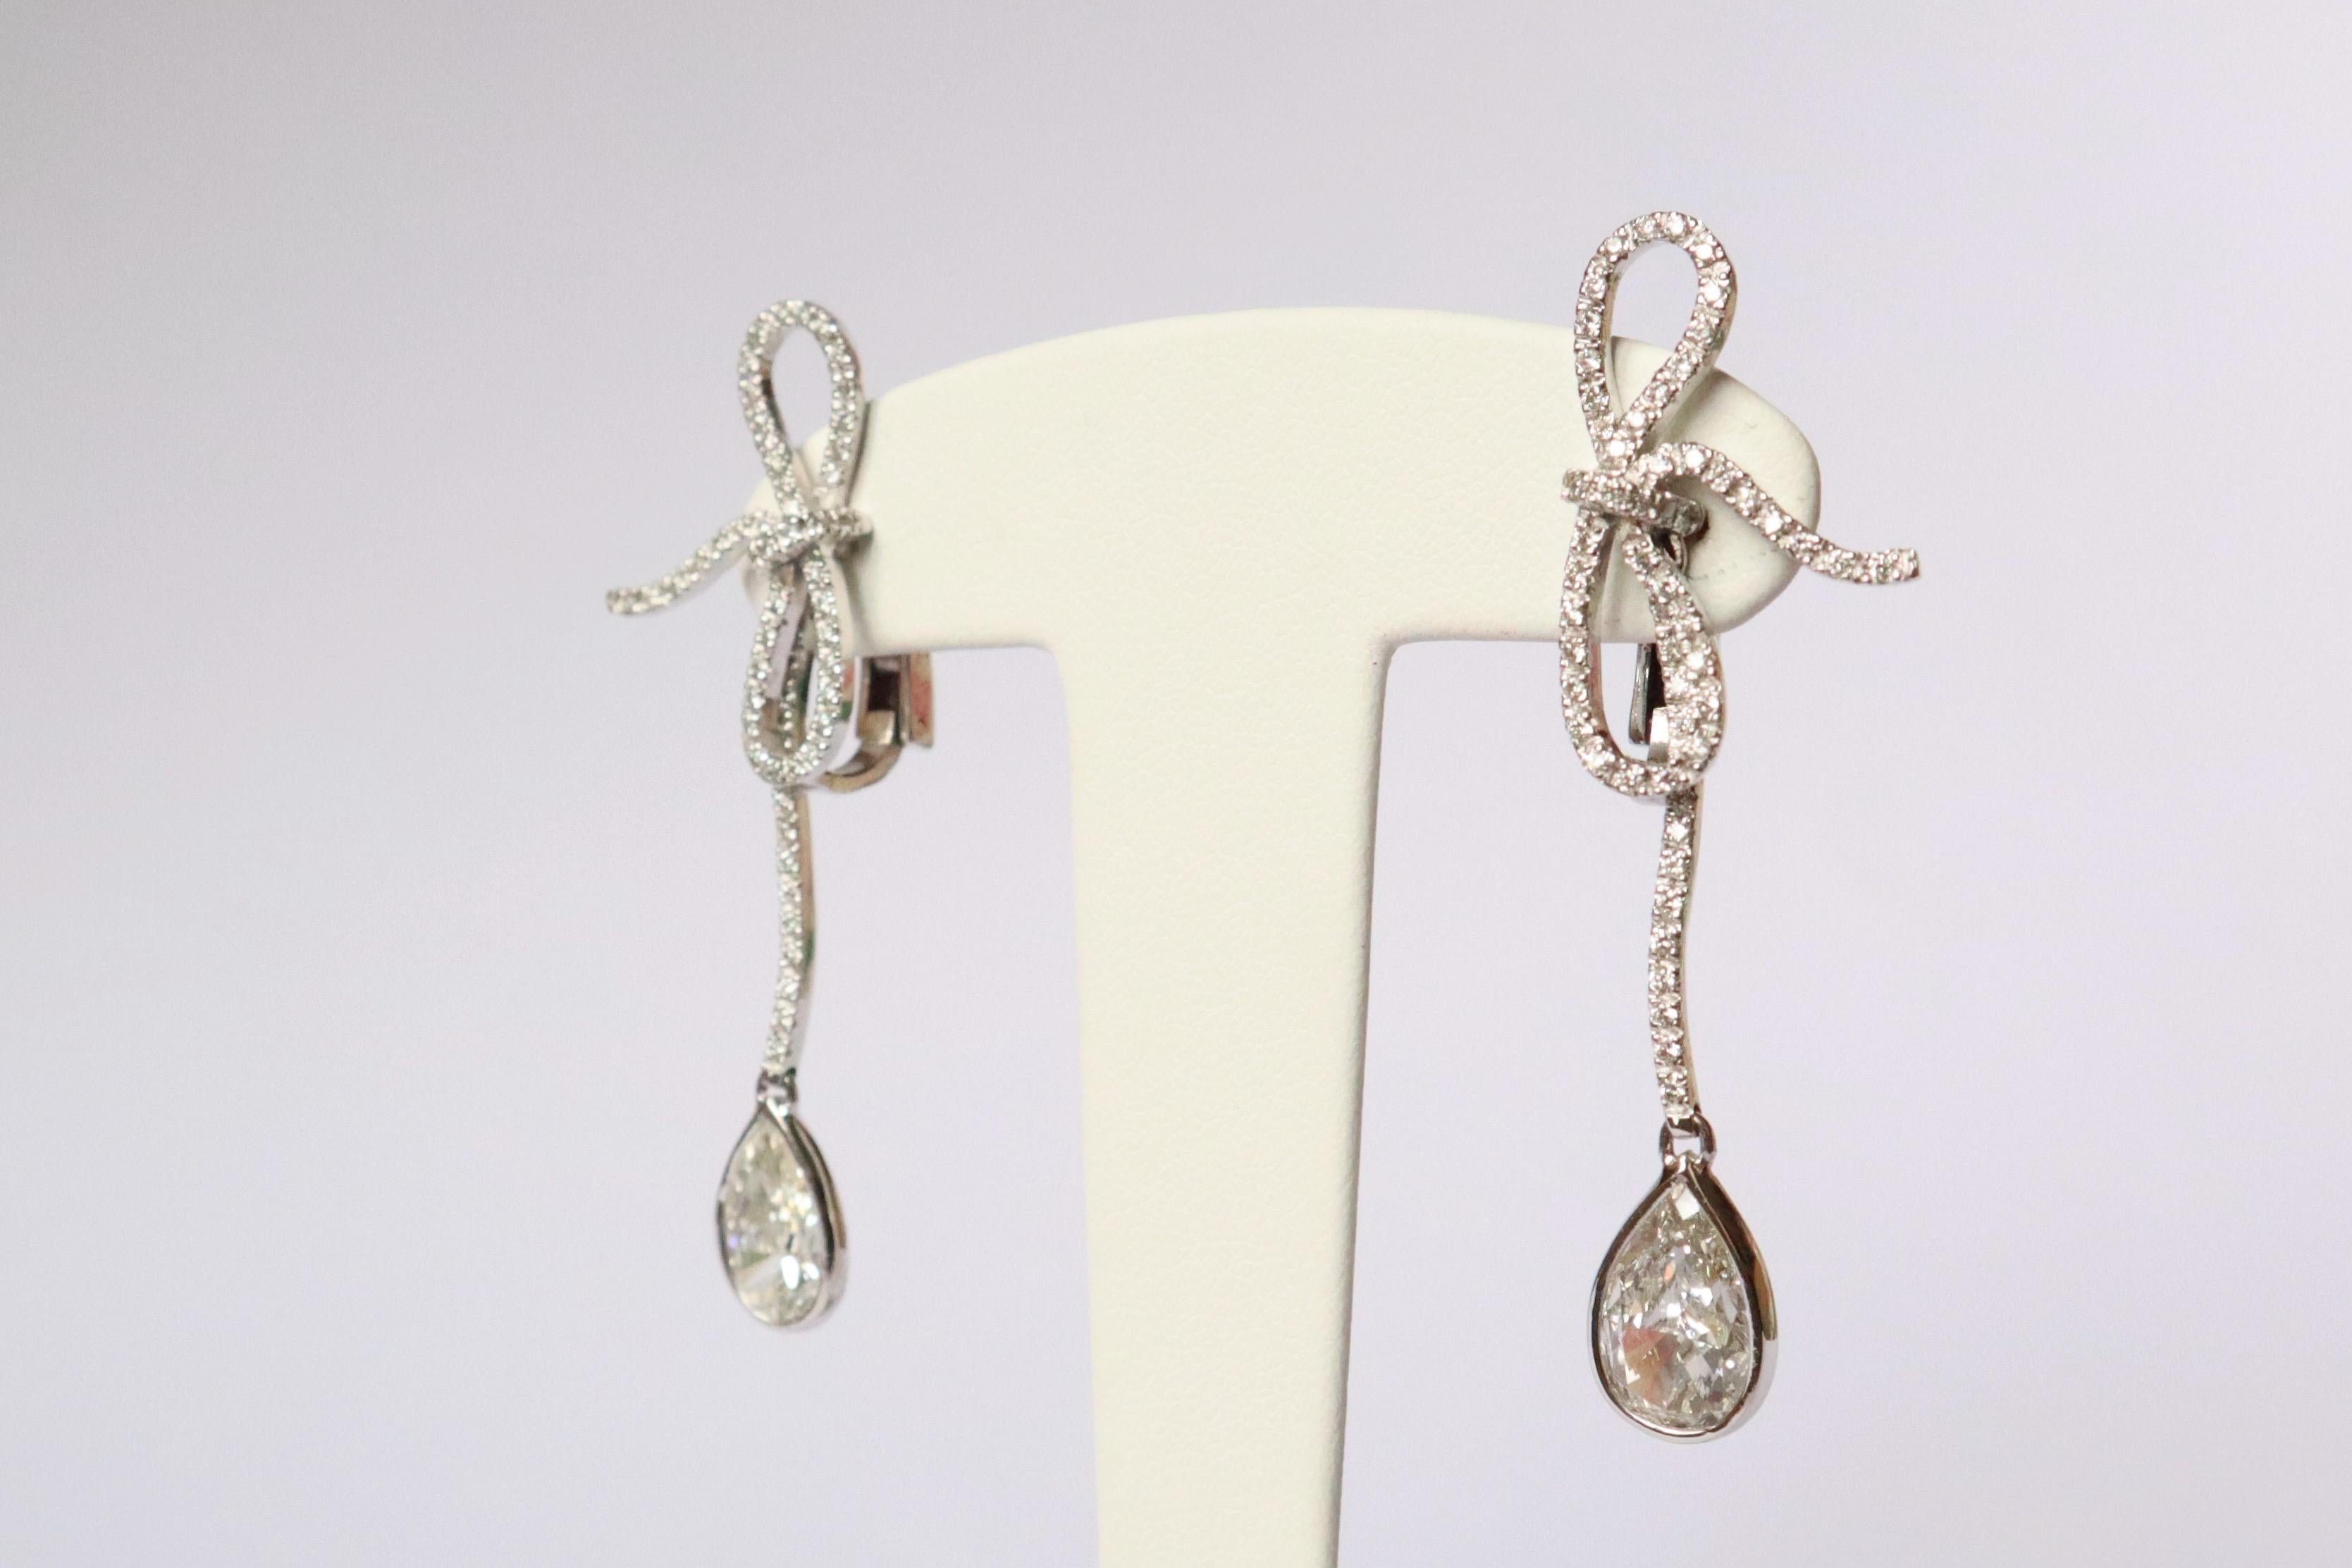 Women's Diamond Earrings in 18 Carat White Gold  4 Carats of Diamonds Knot Pattern For Sale